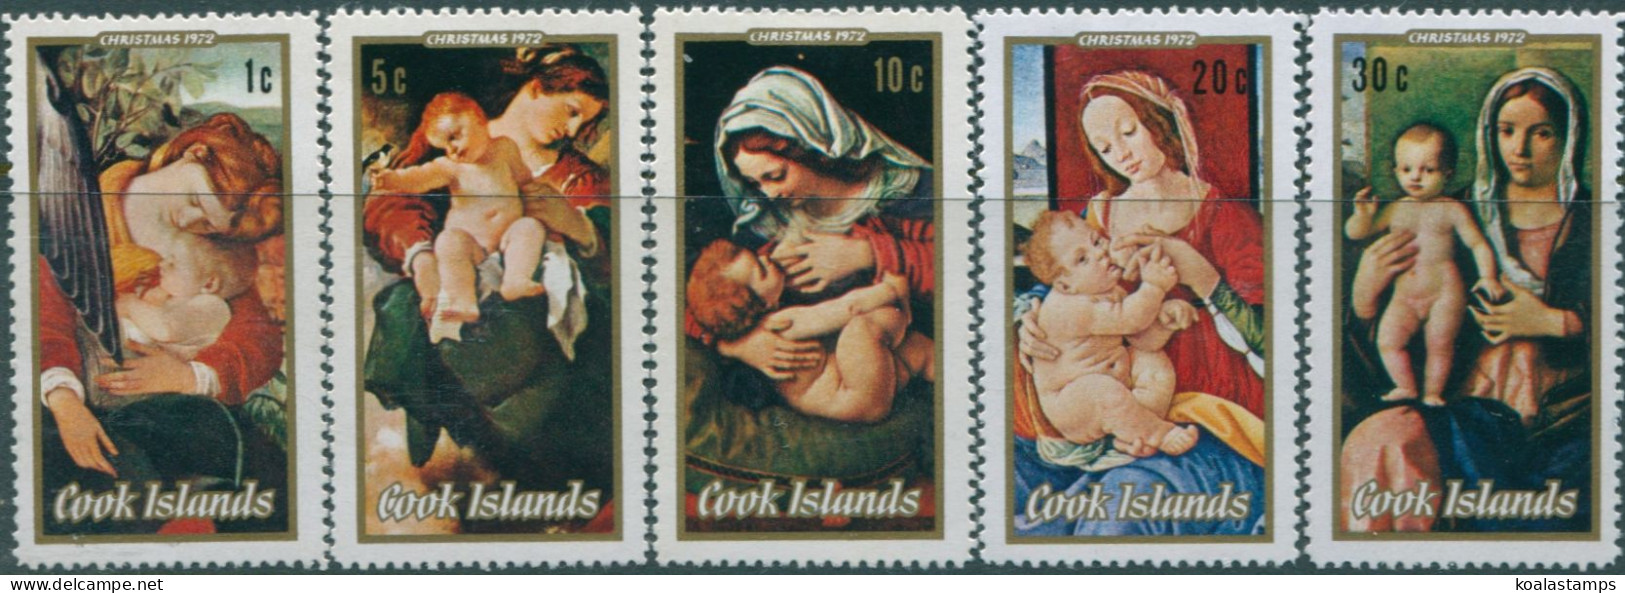 Cook Islands 1972 SG406-410 Christmas Set MLH - Cook Islands